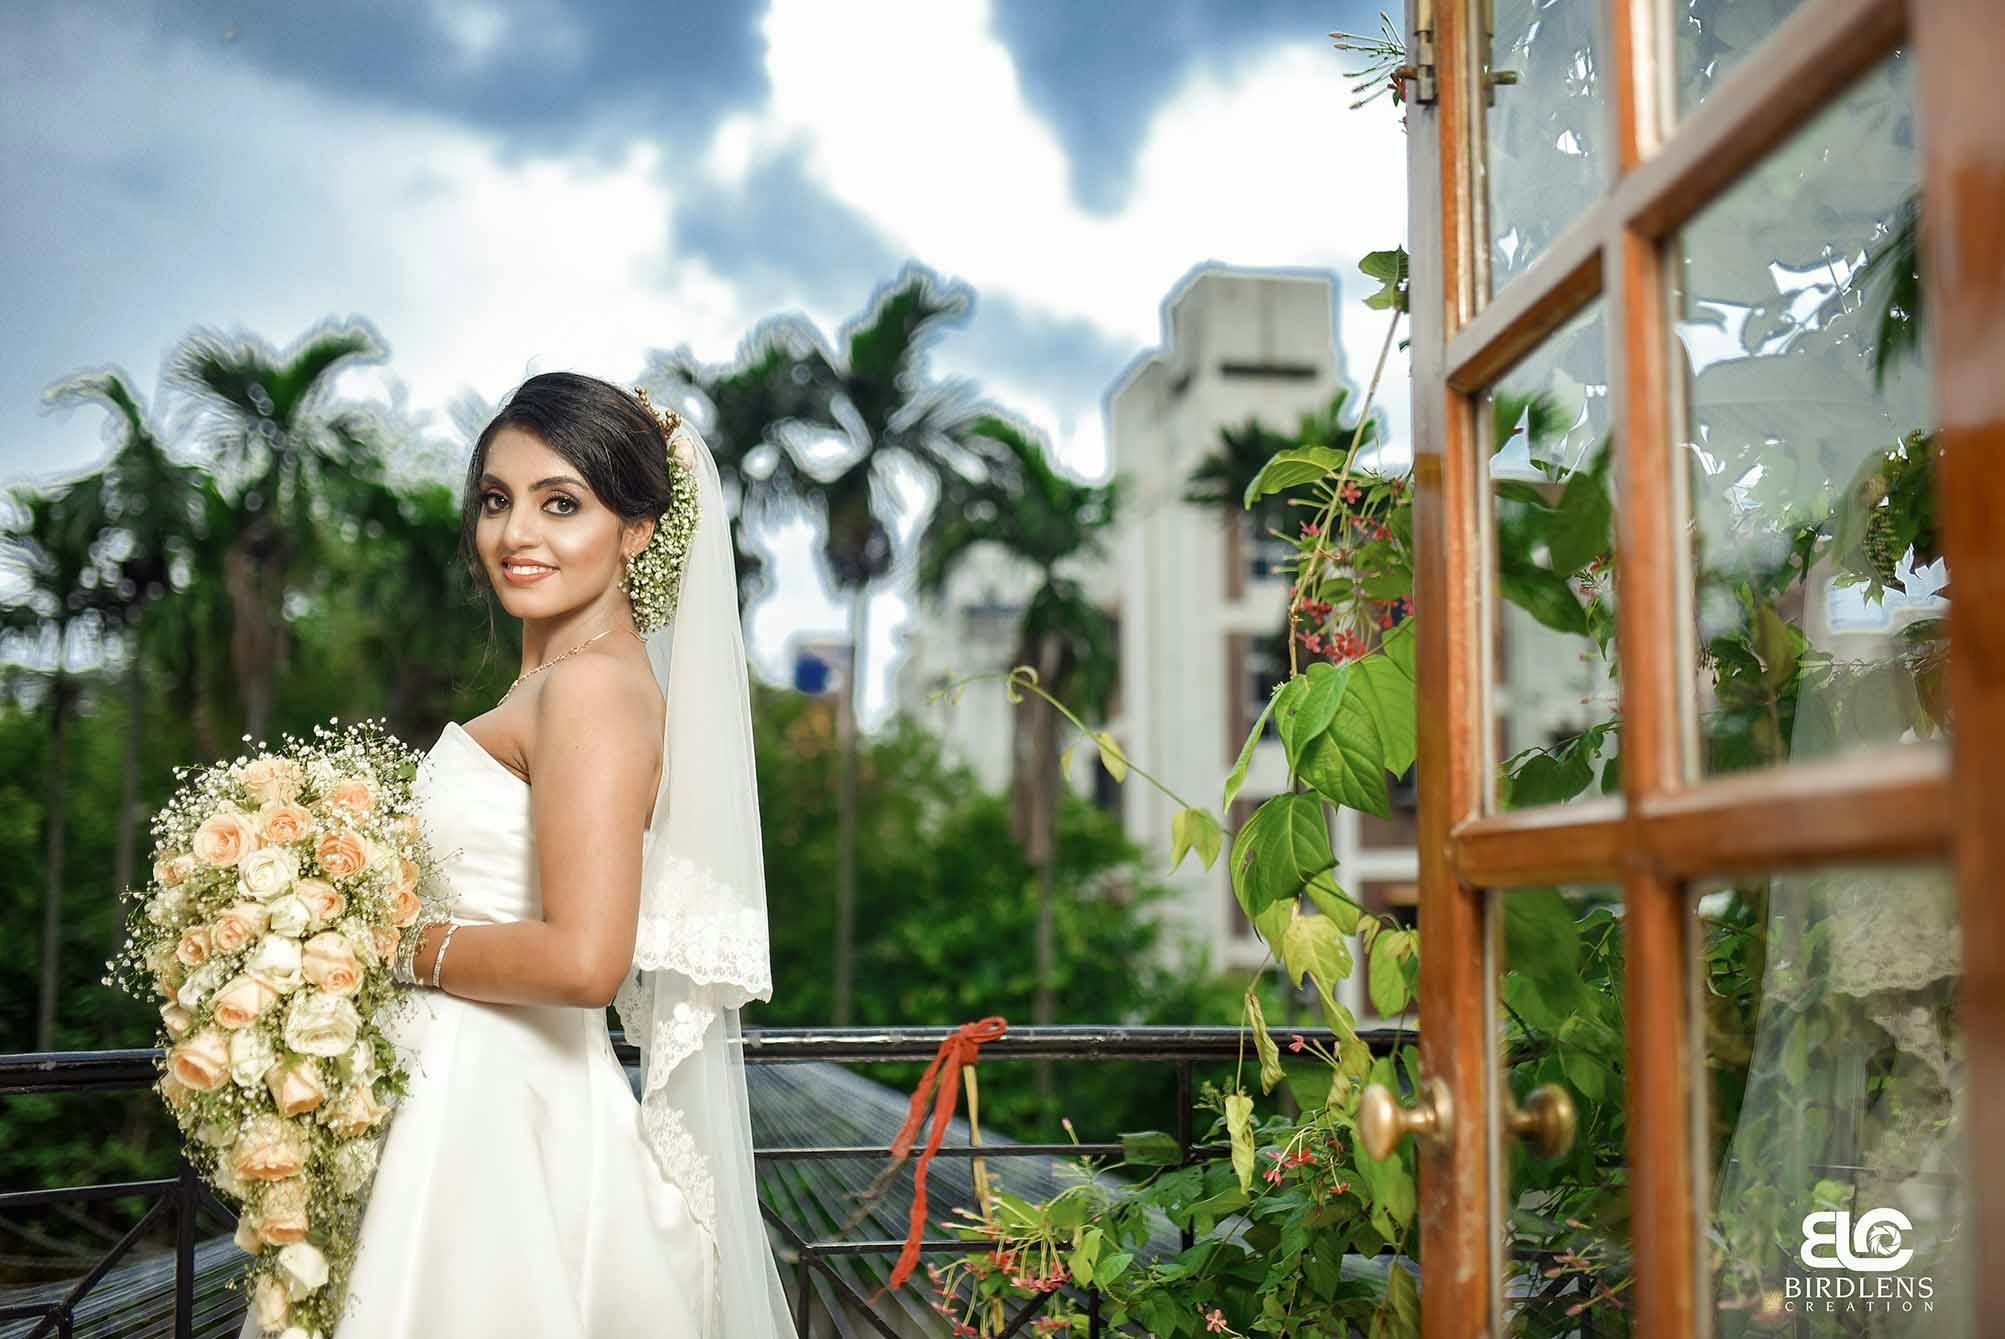 Wedding photography cost in kolkata